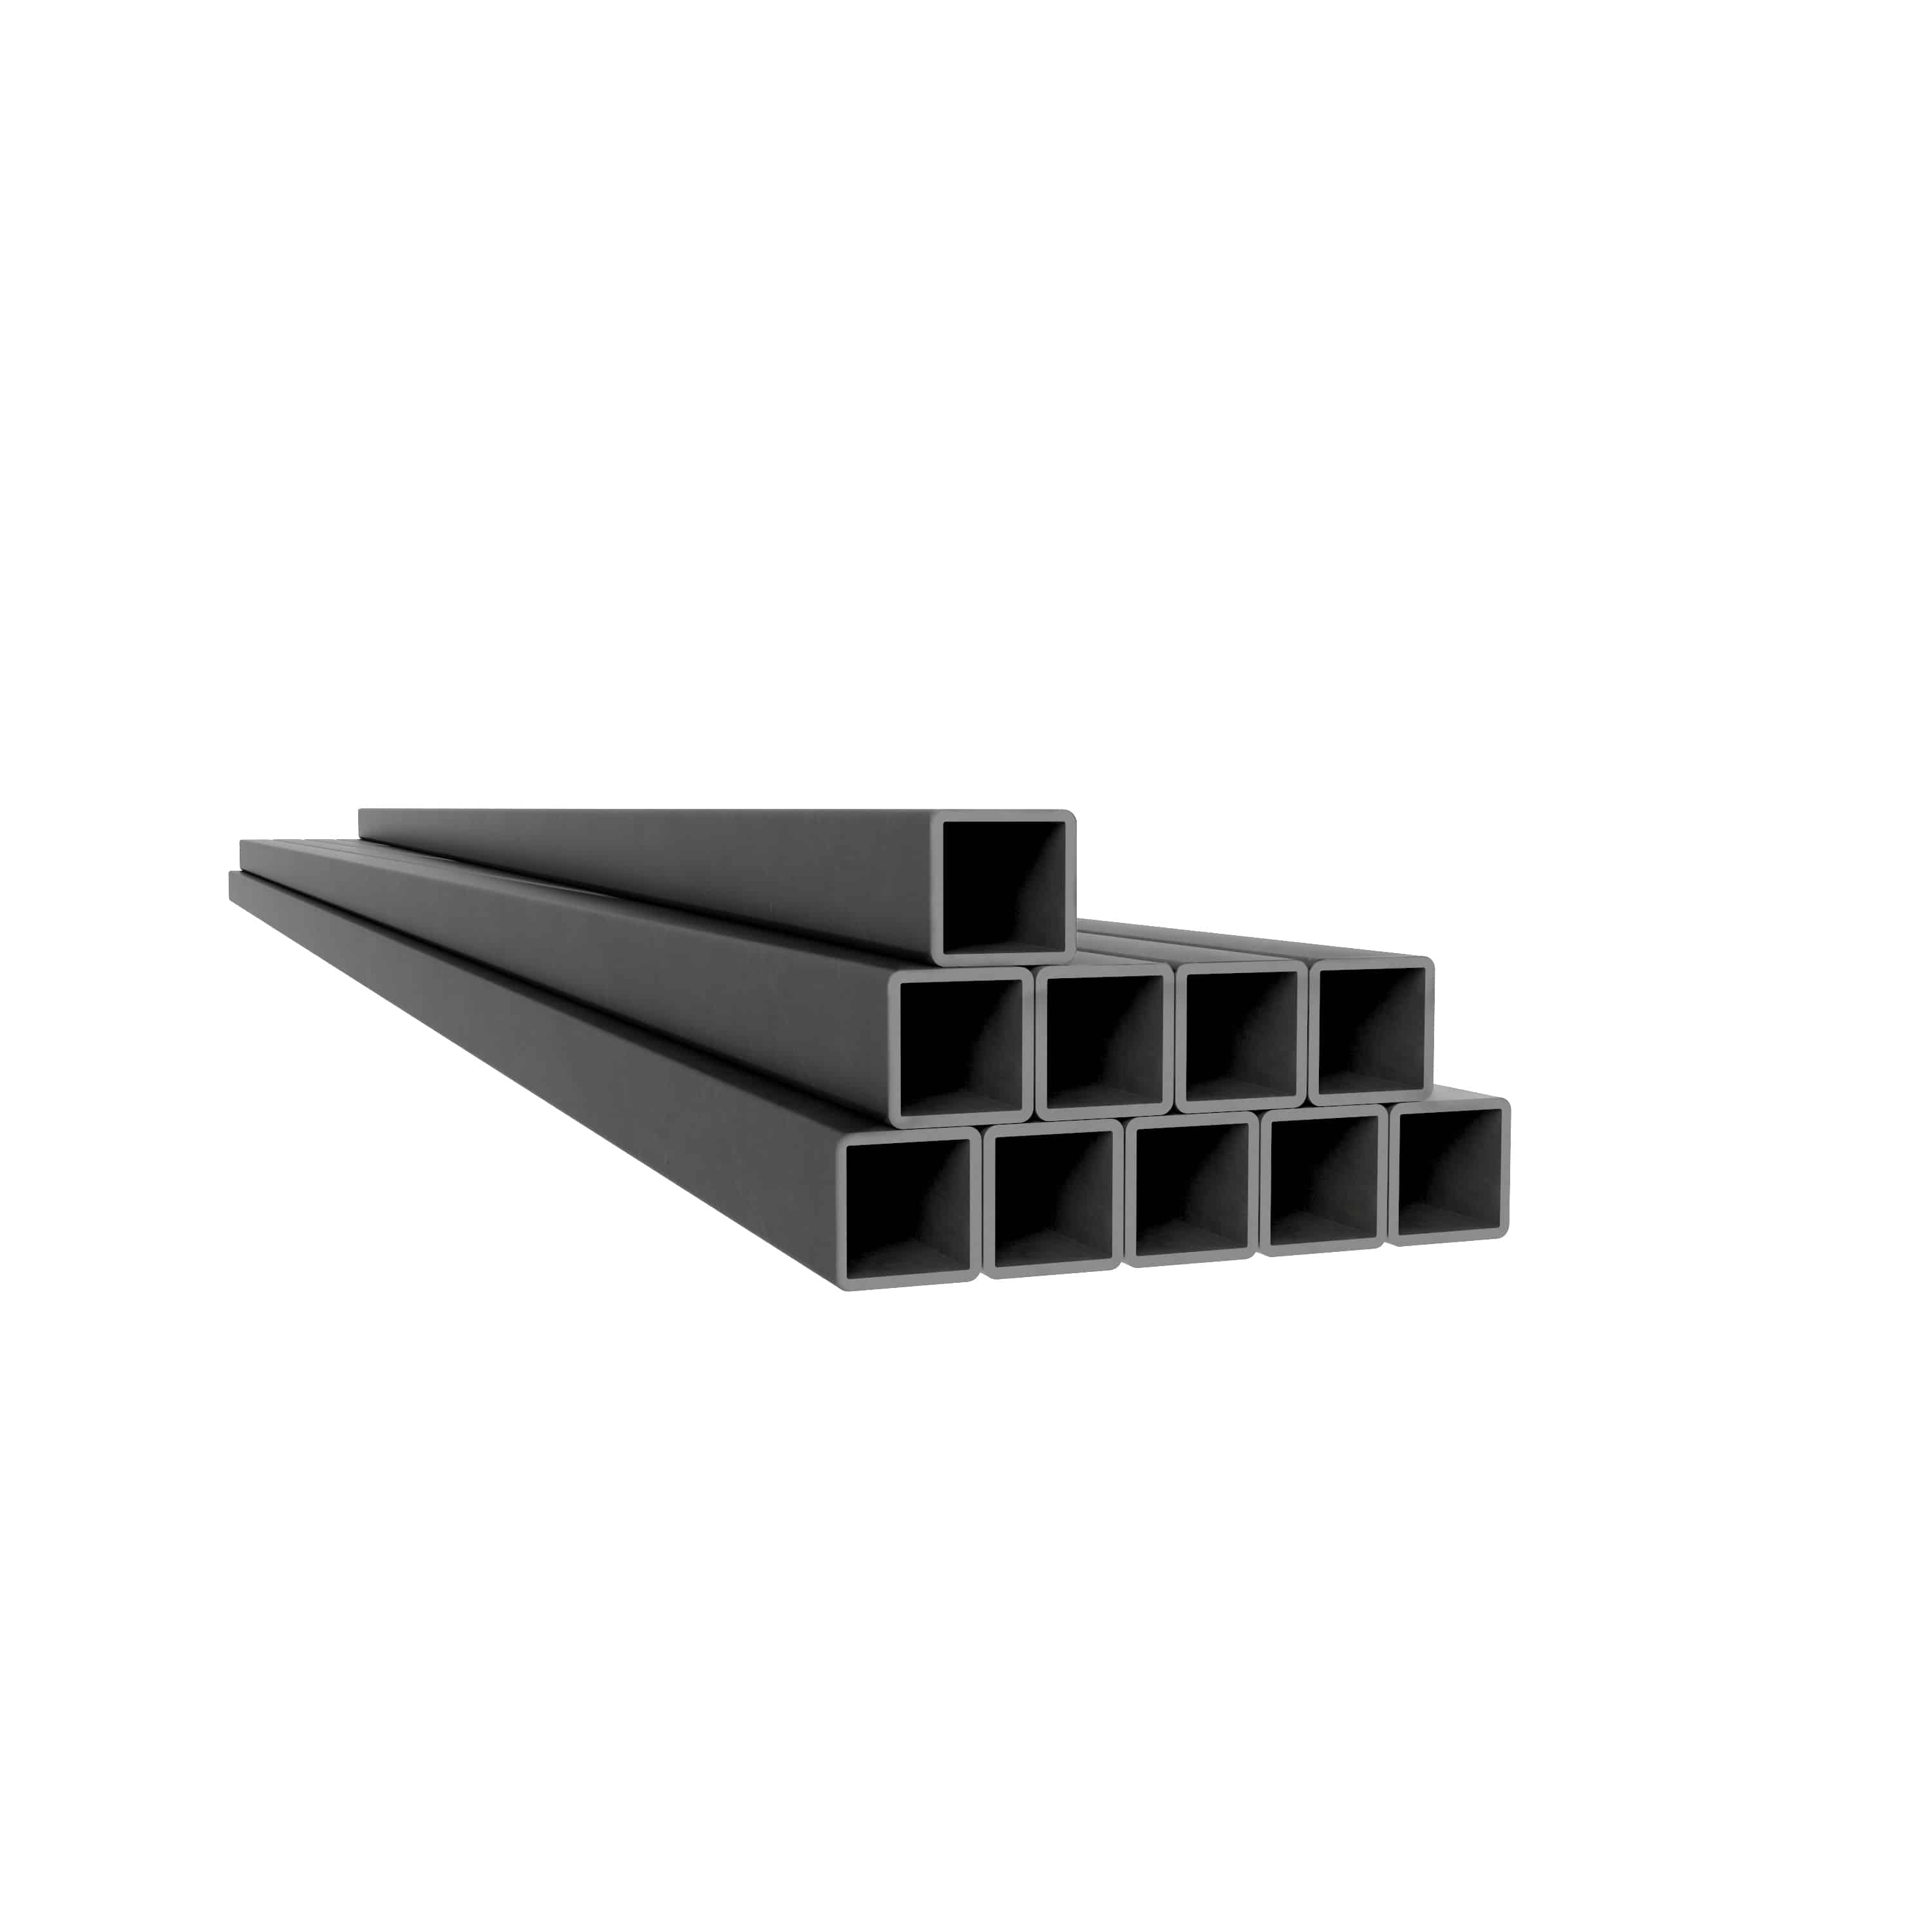 Square Pipe - Square pipe 50 x 50 x 5 mm S235-12LM, https:maxbau.ro